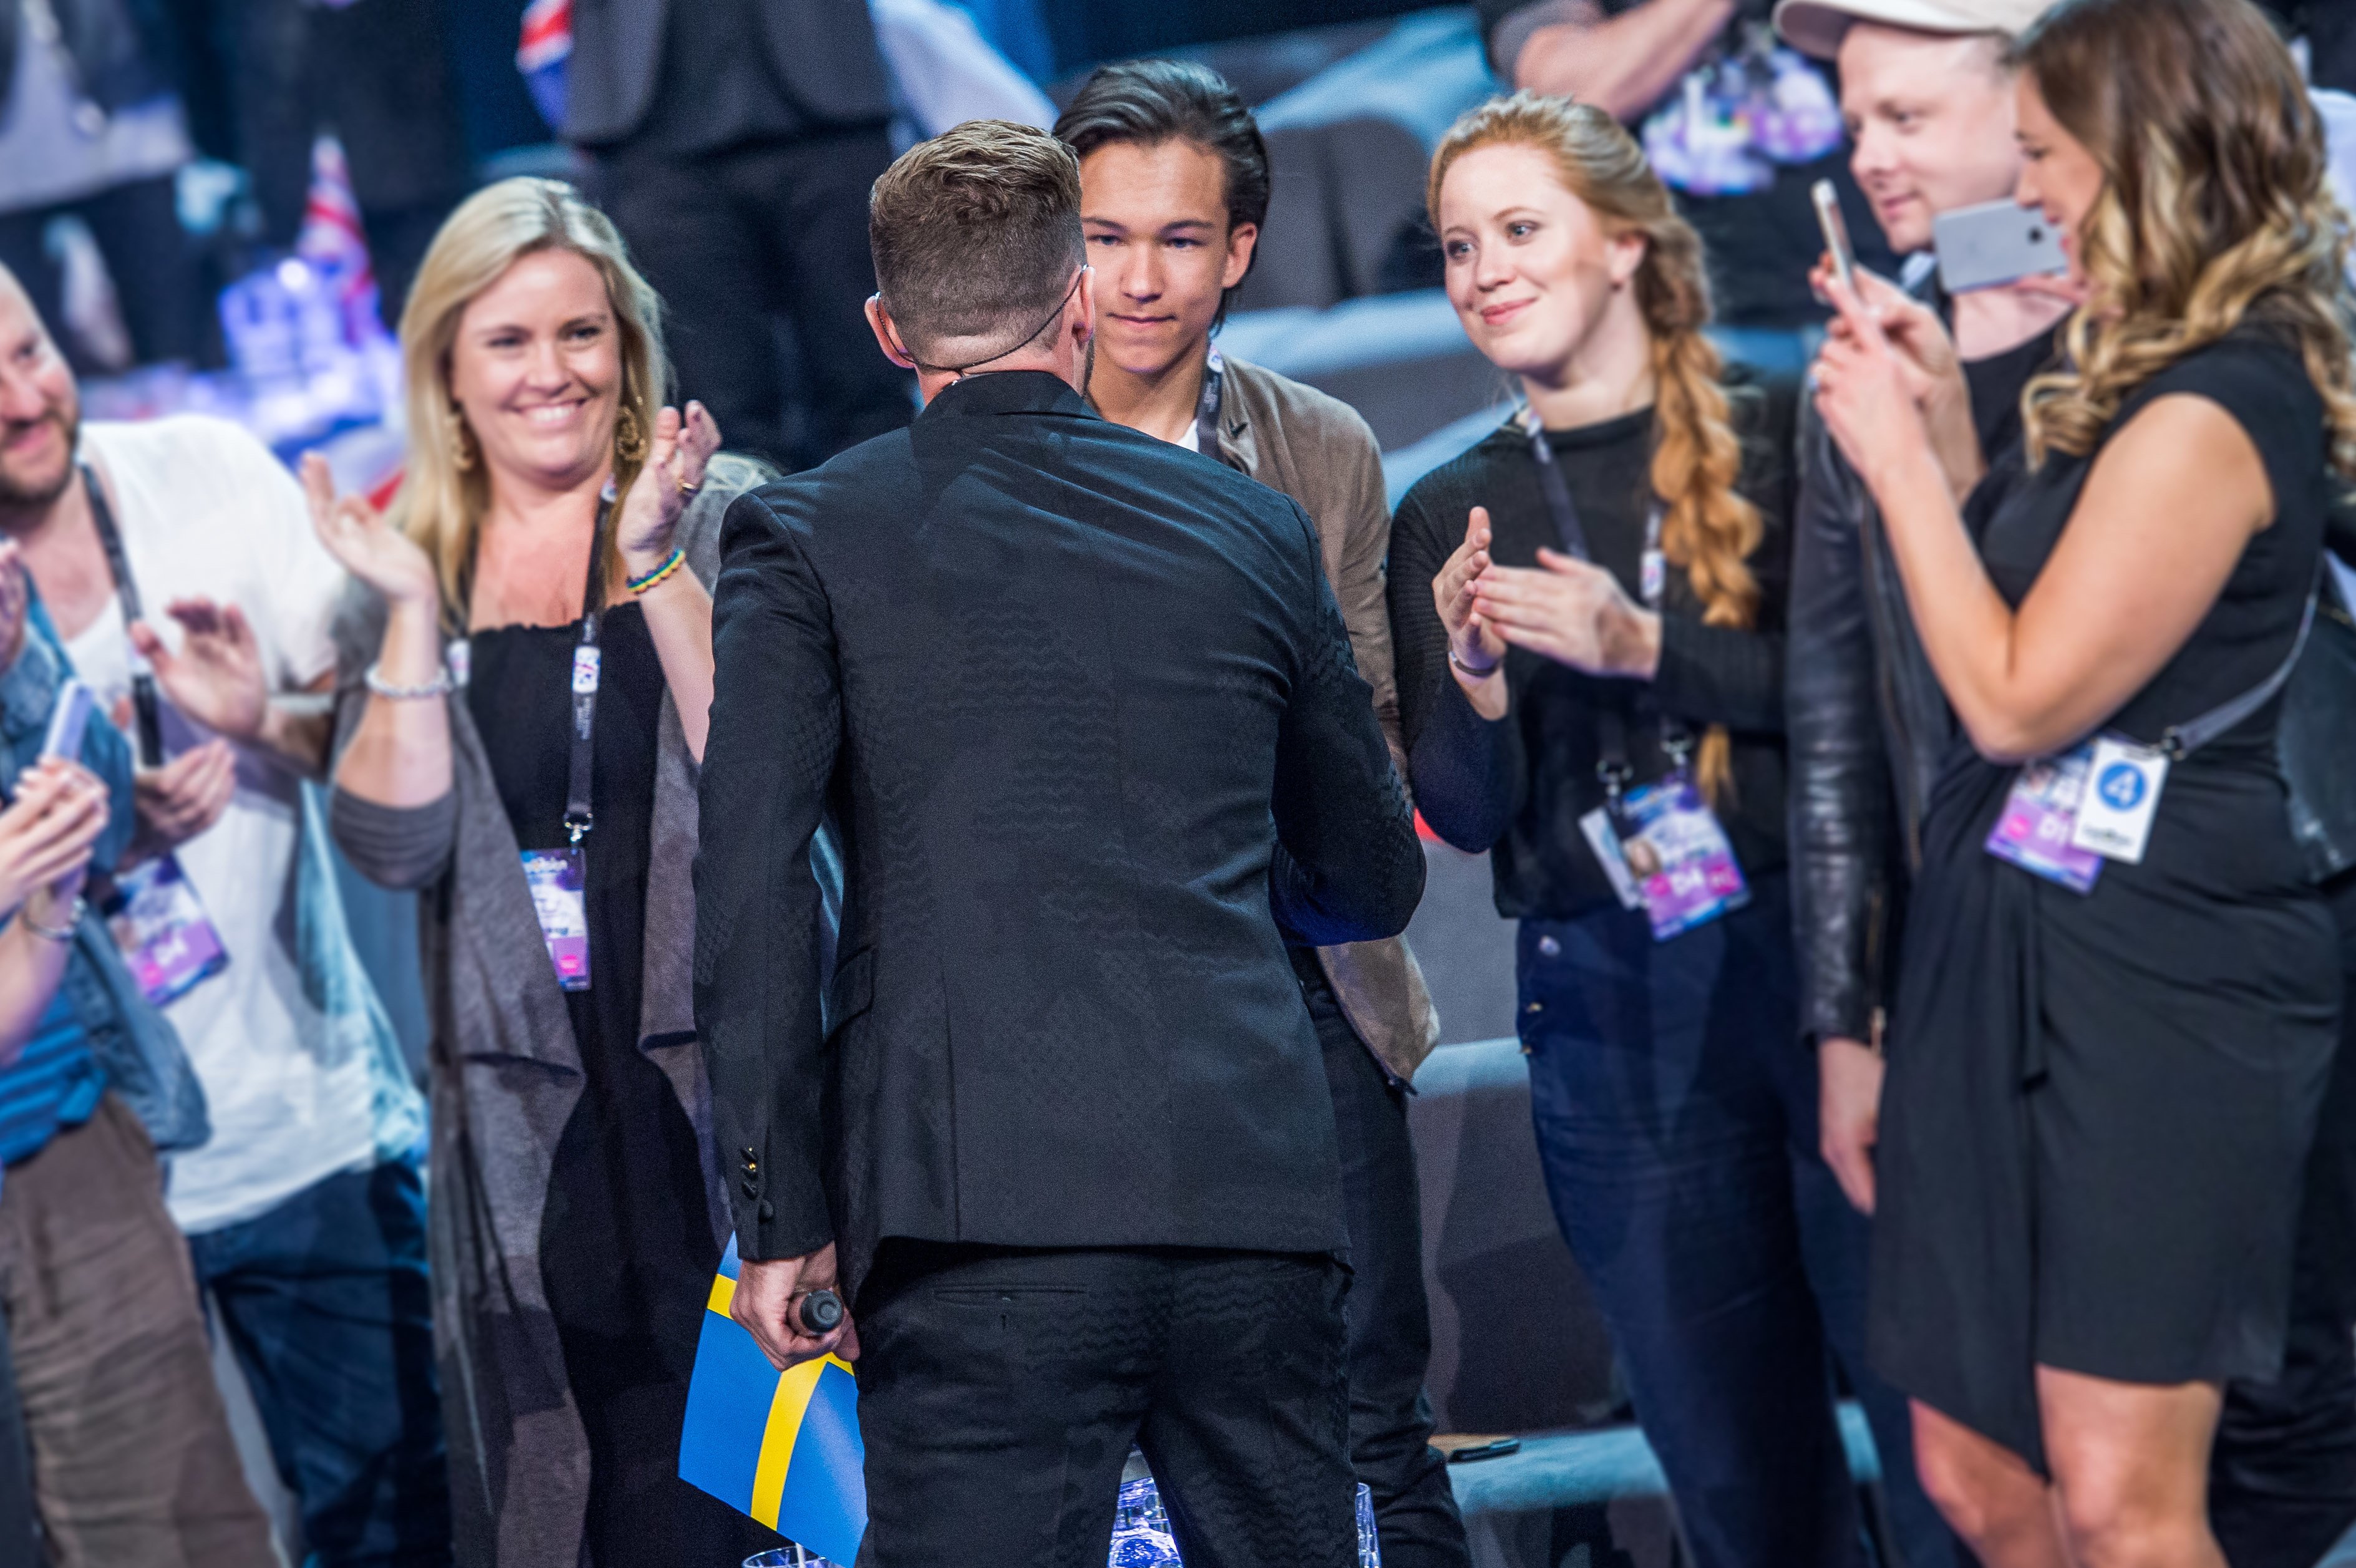 Genrep, Frans Jeppsson Wall, Melodifestivalen 2016, Eurovision Song Contest, Justin Timberlake